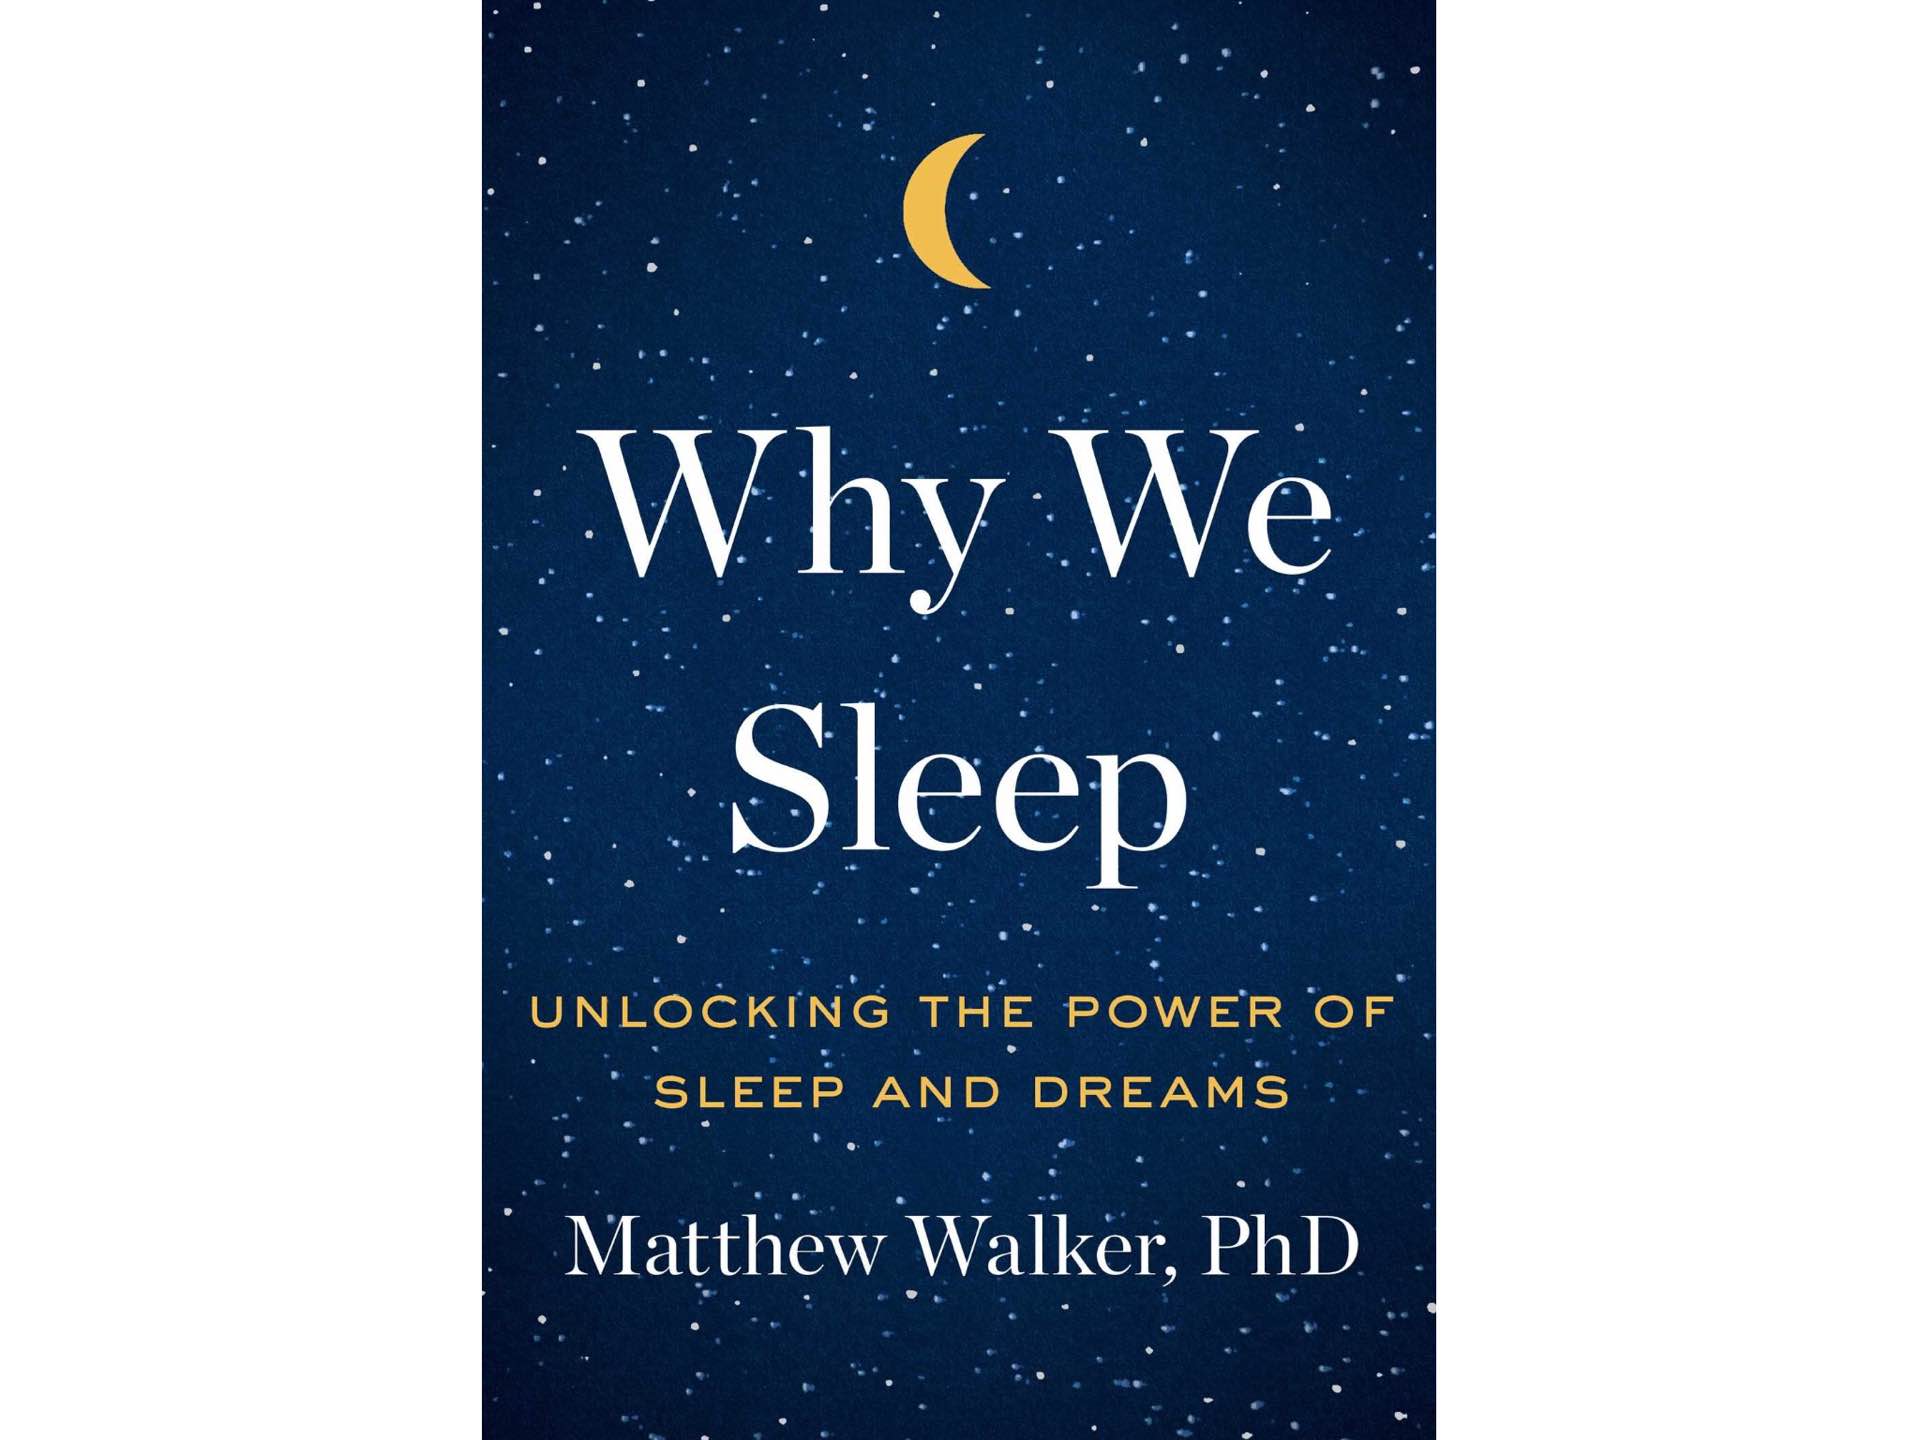 Why We Sleep by Matthew Walker.